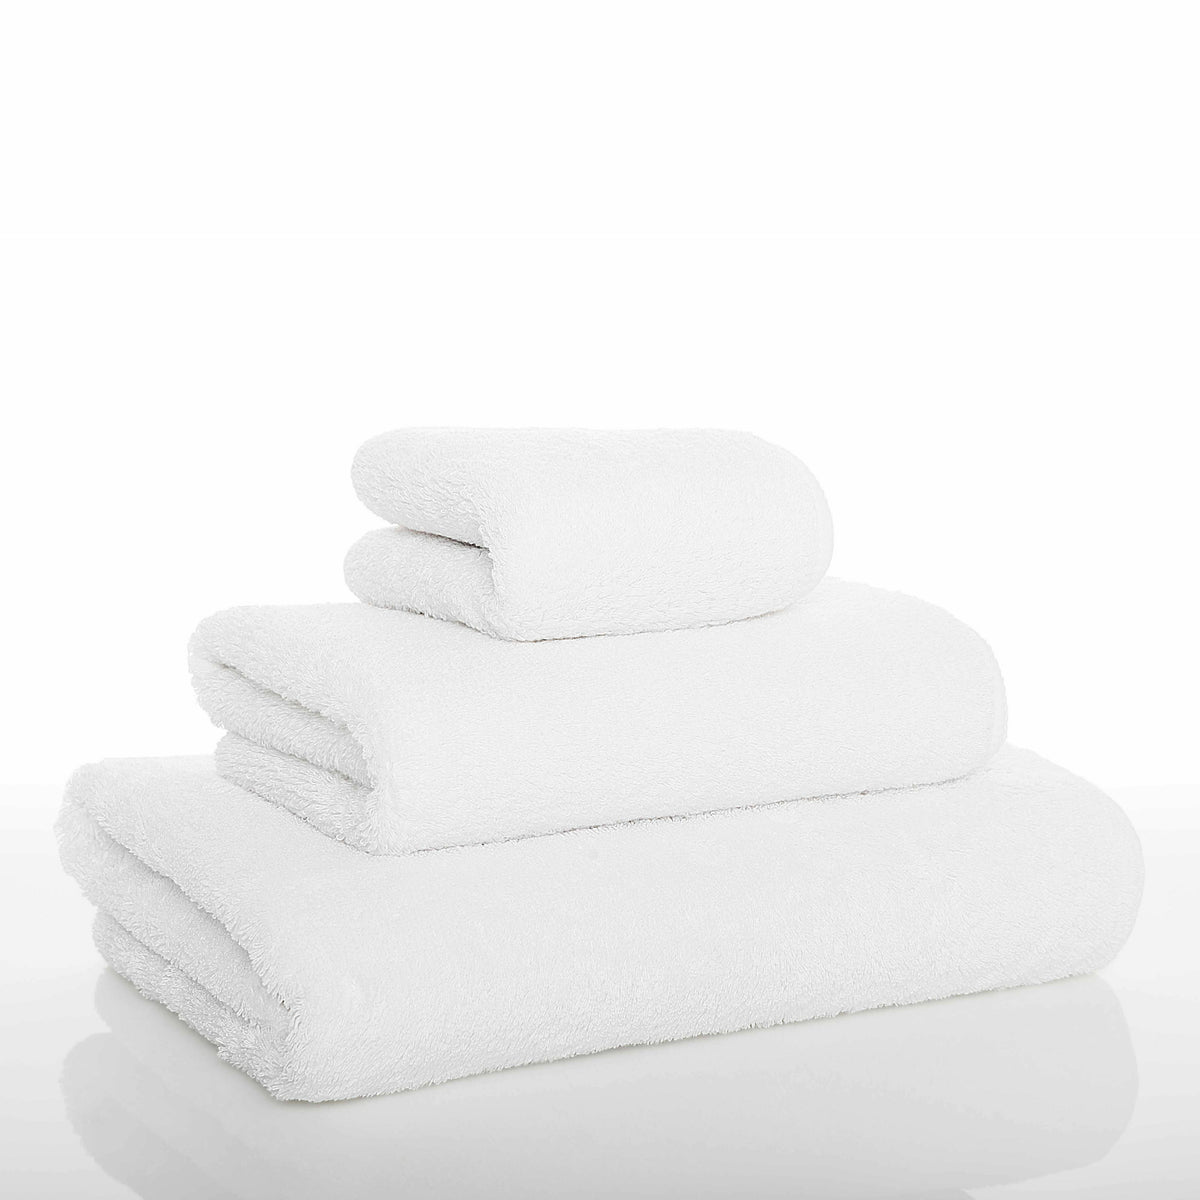 Graccioza Long Double Loop Bath Towel White